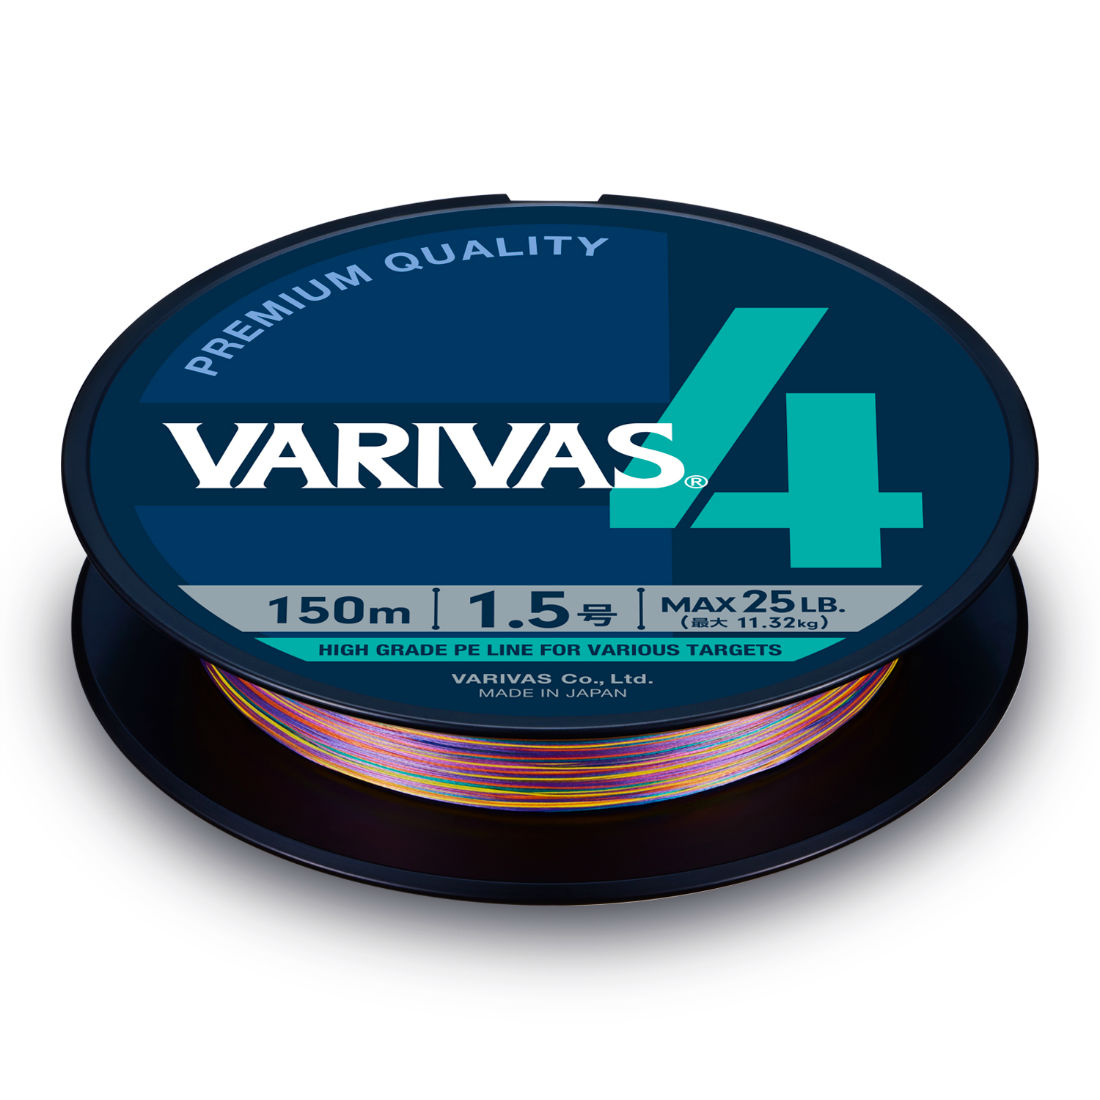 FIR VARIVAS PE 4 MARKING EDITION 150m 0.205mm 25lb Vivid 5 Color